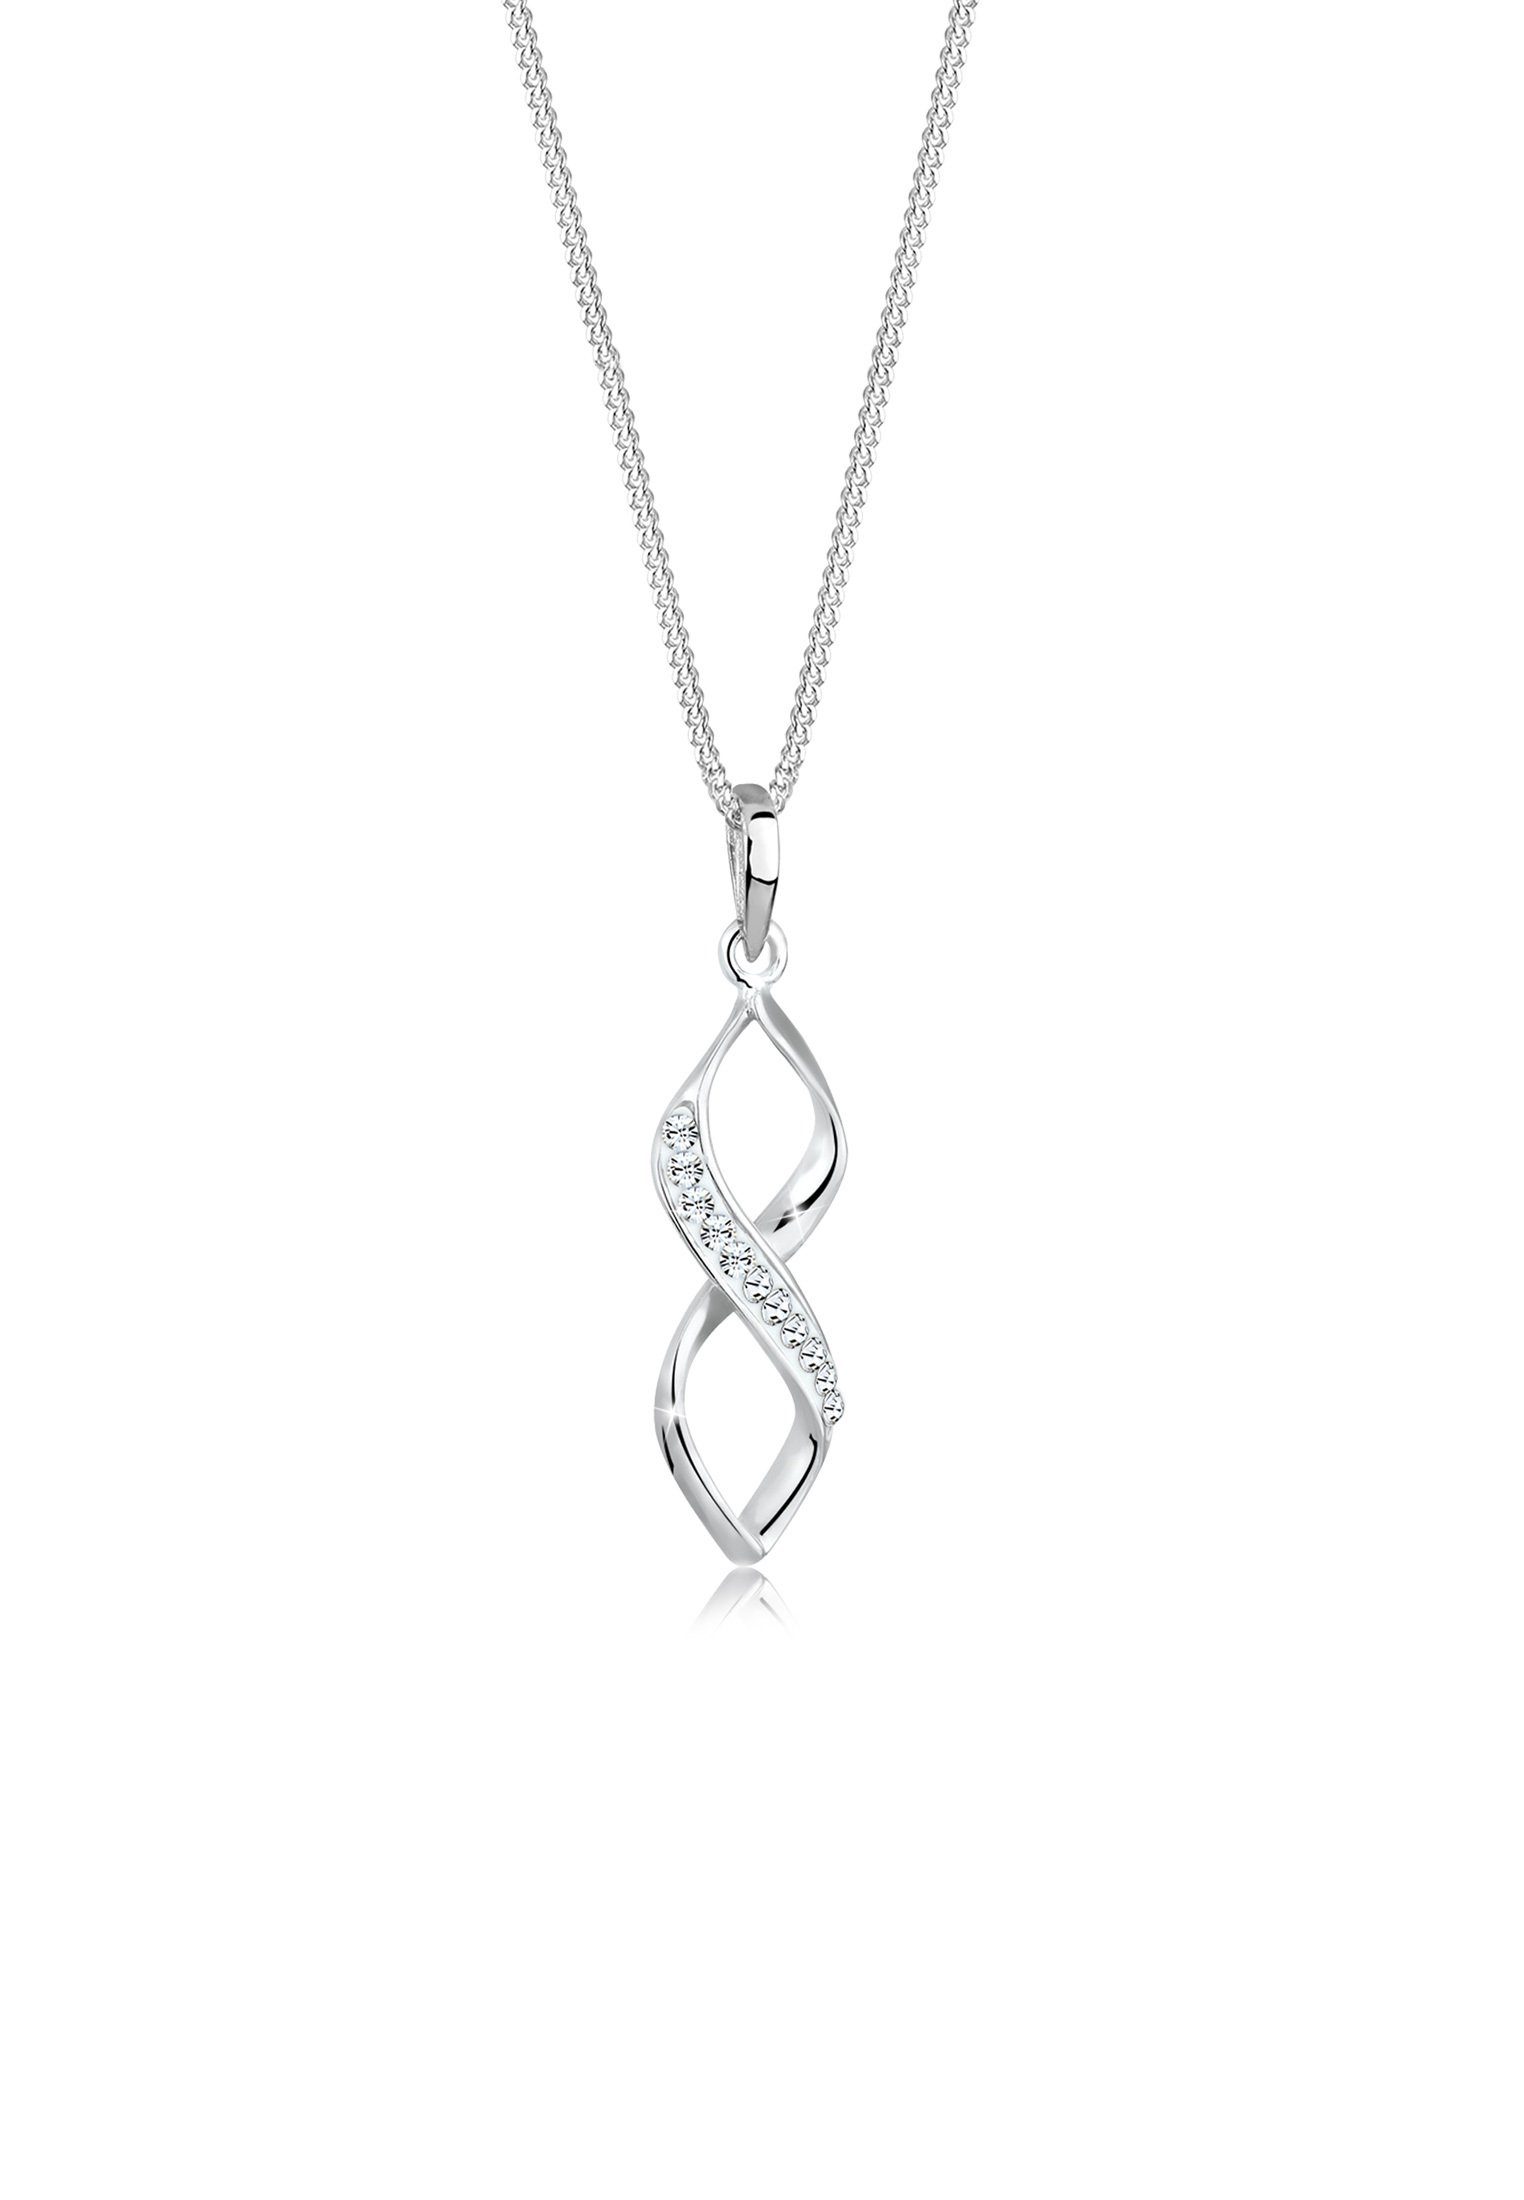 Edel Infinity Kette Silber, Elli 925 Kristalle Infinity mit Anhänger